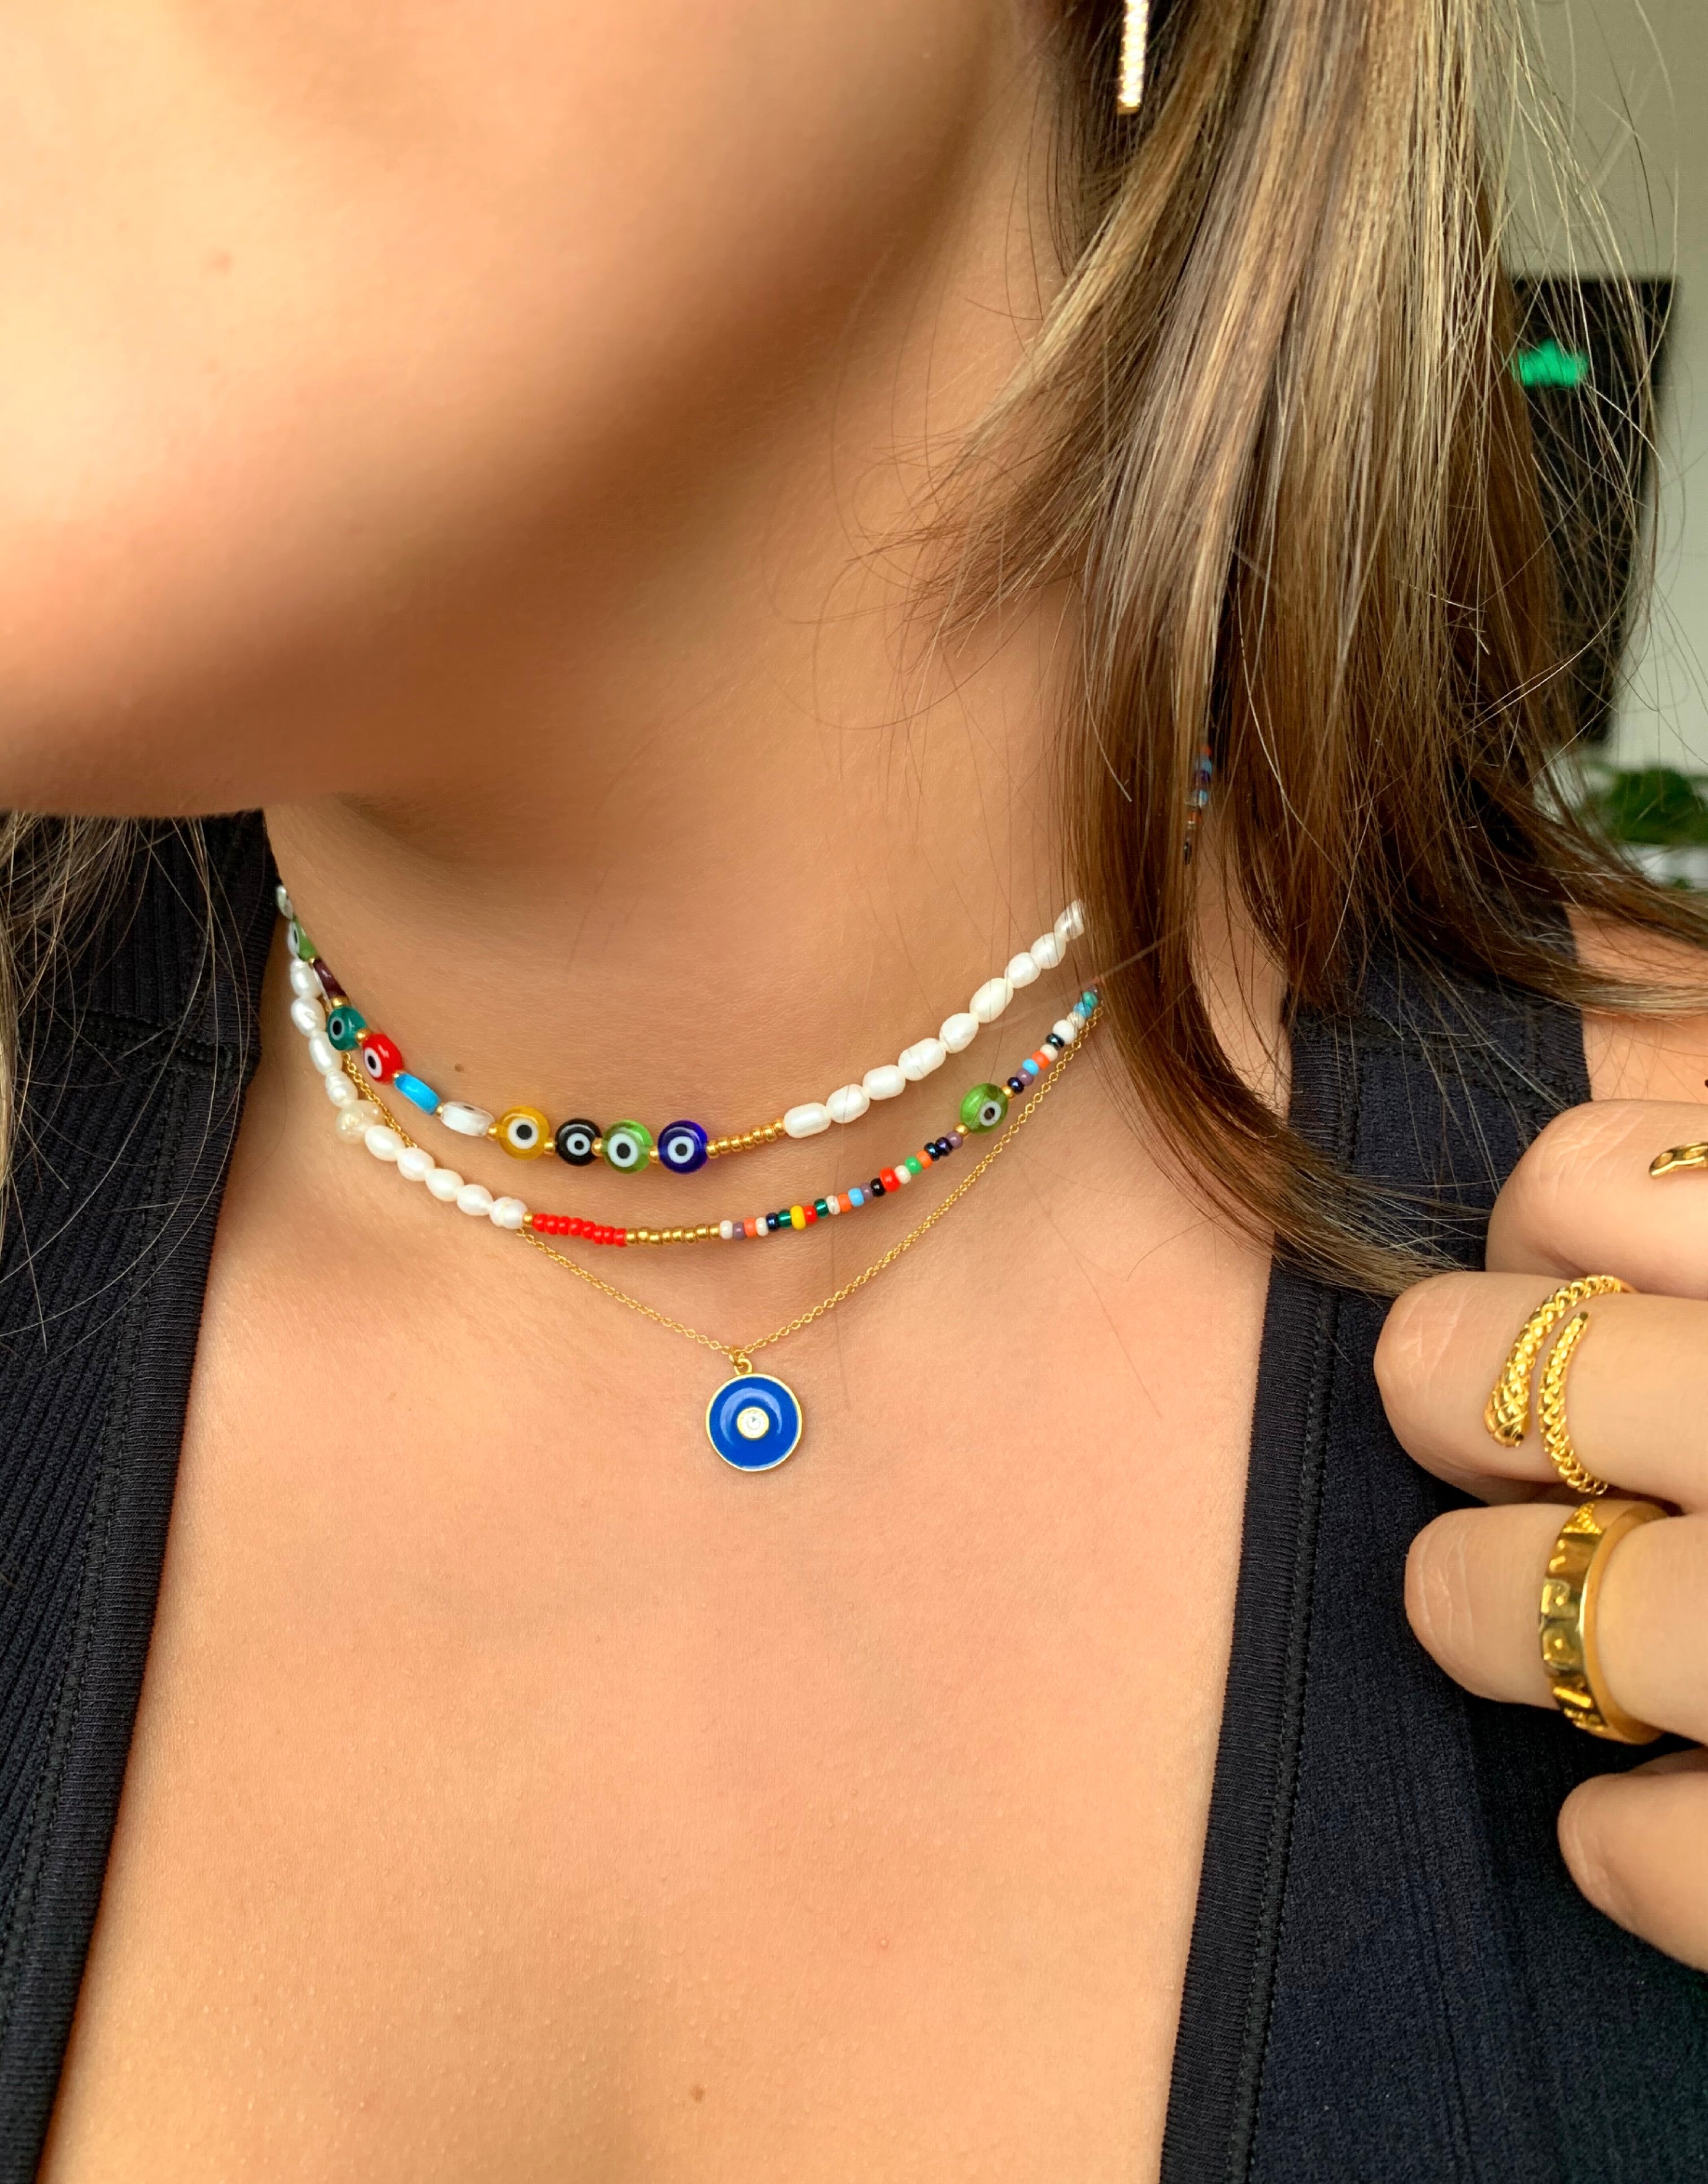 BLUE ENAMEL CIRCLE necklace